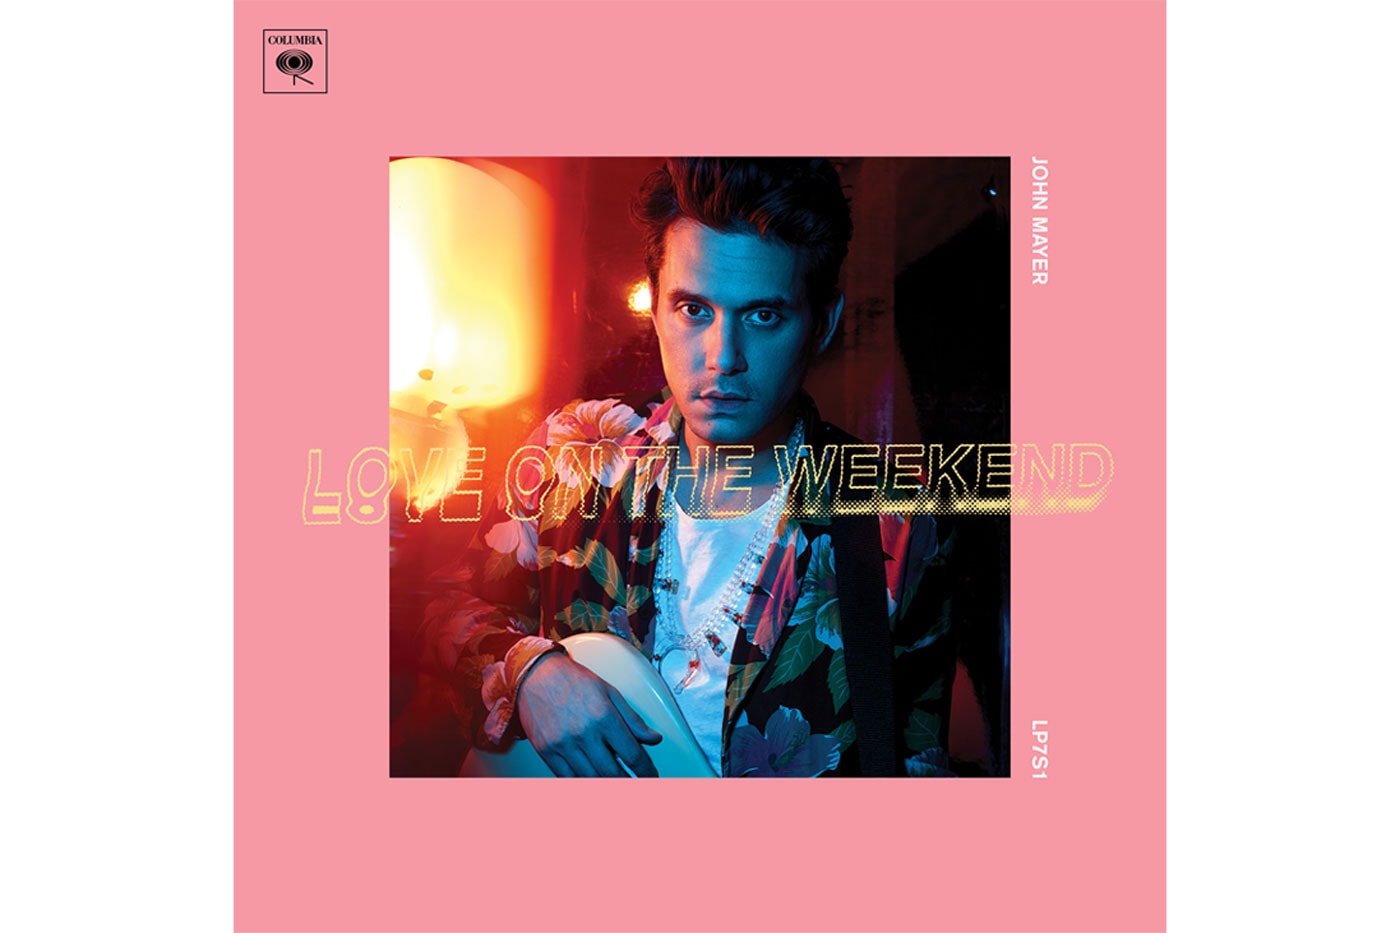 John Mayer Releases New Single "Love on the Weekend," Announces New Album & 2017 Tour Music visvim Videos